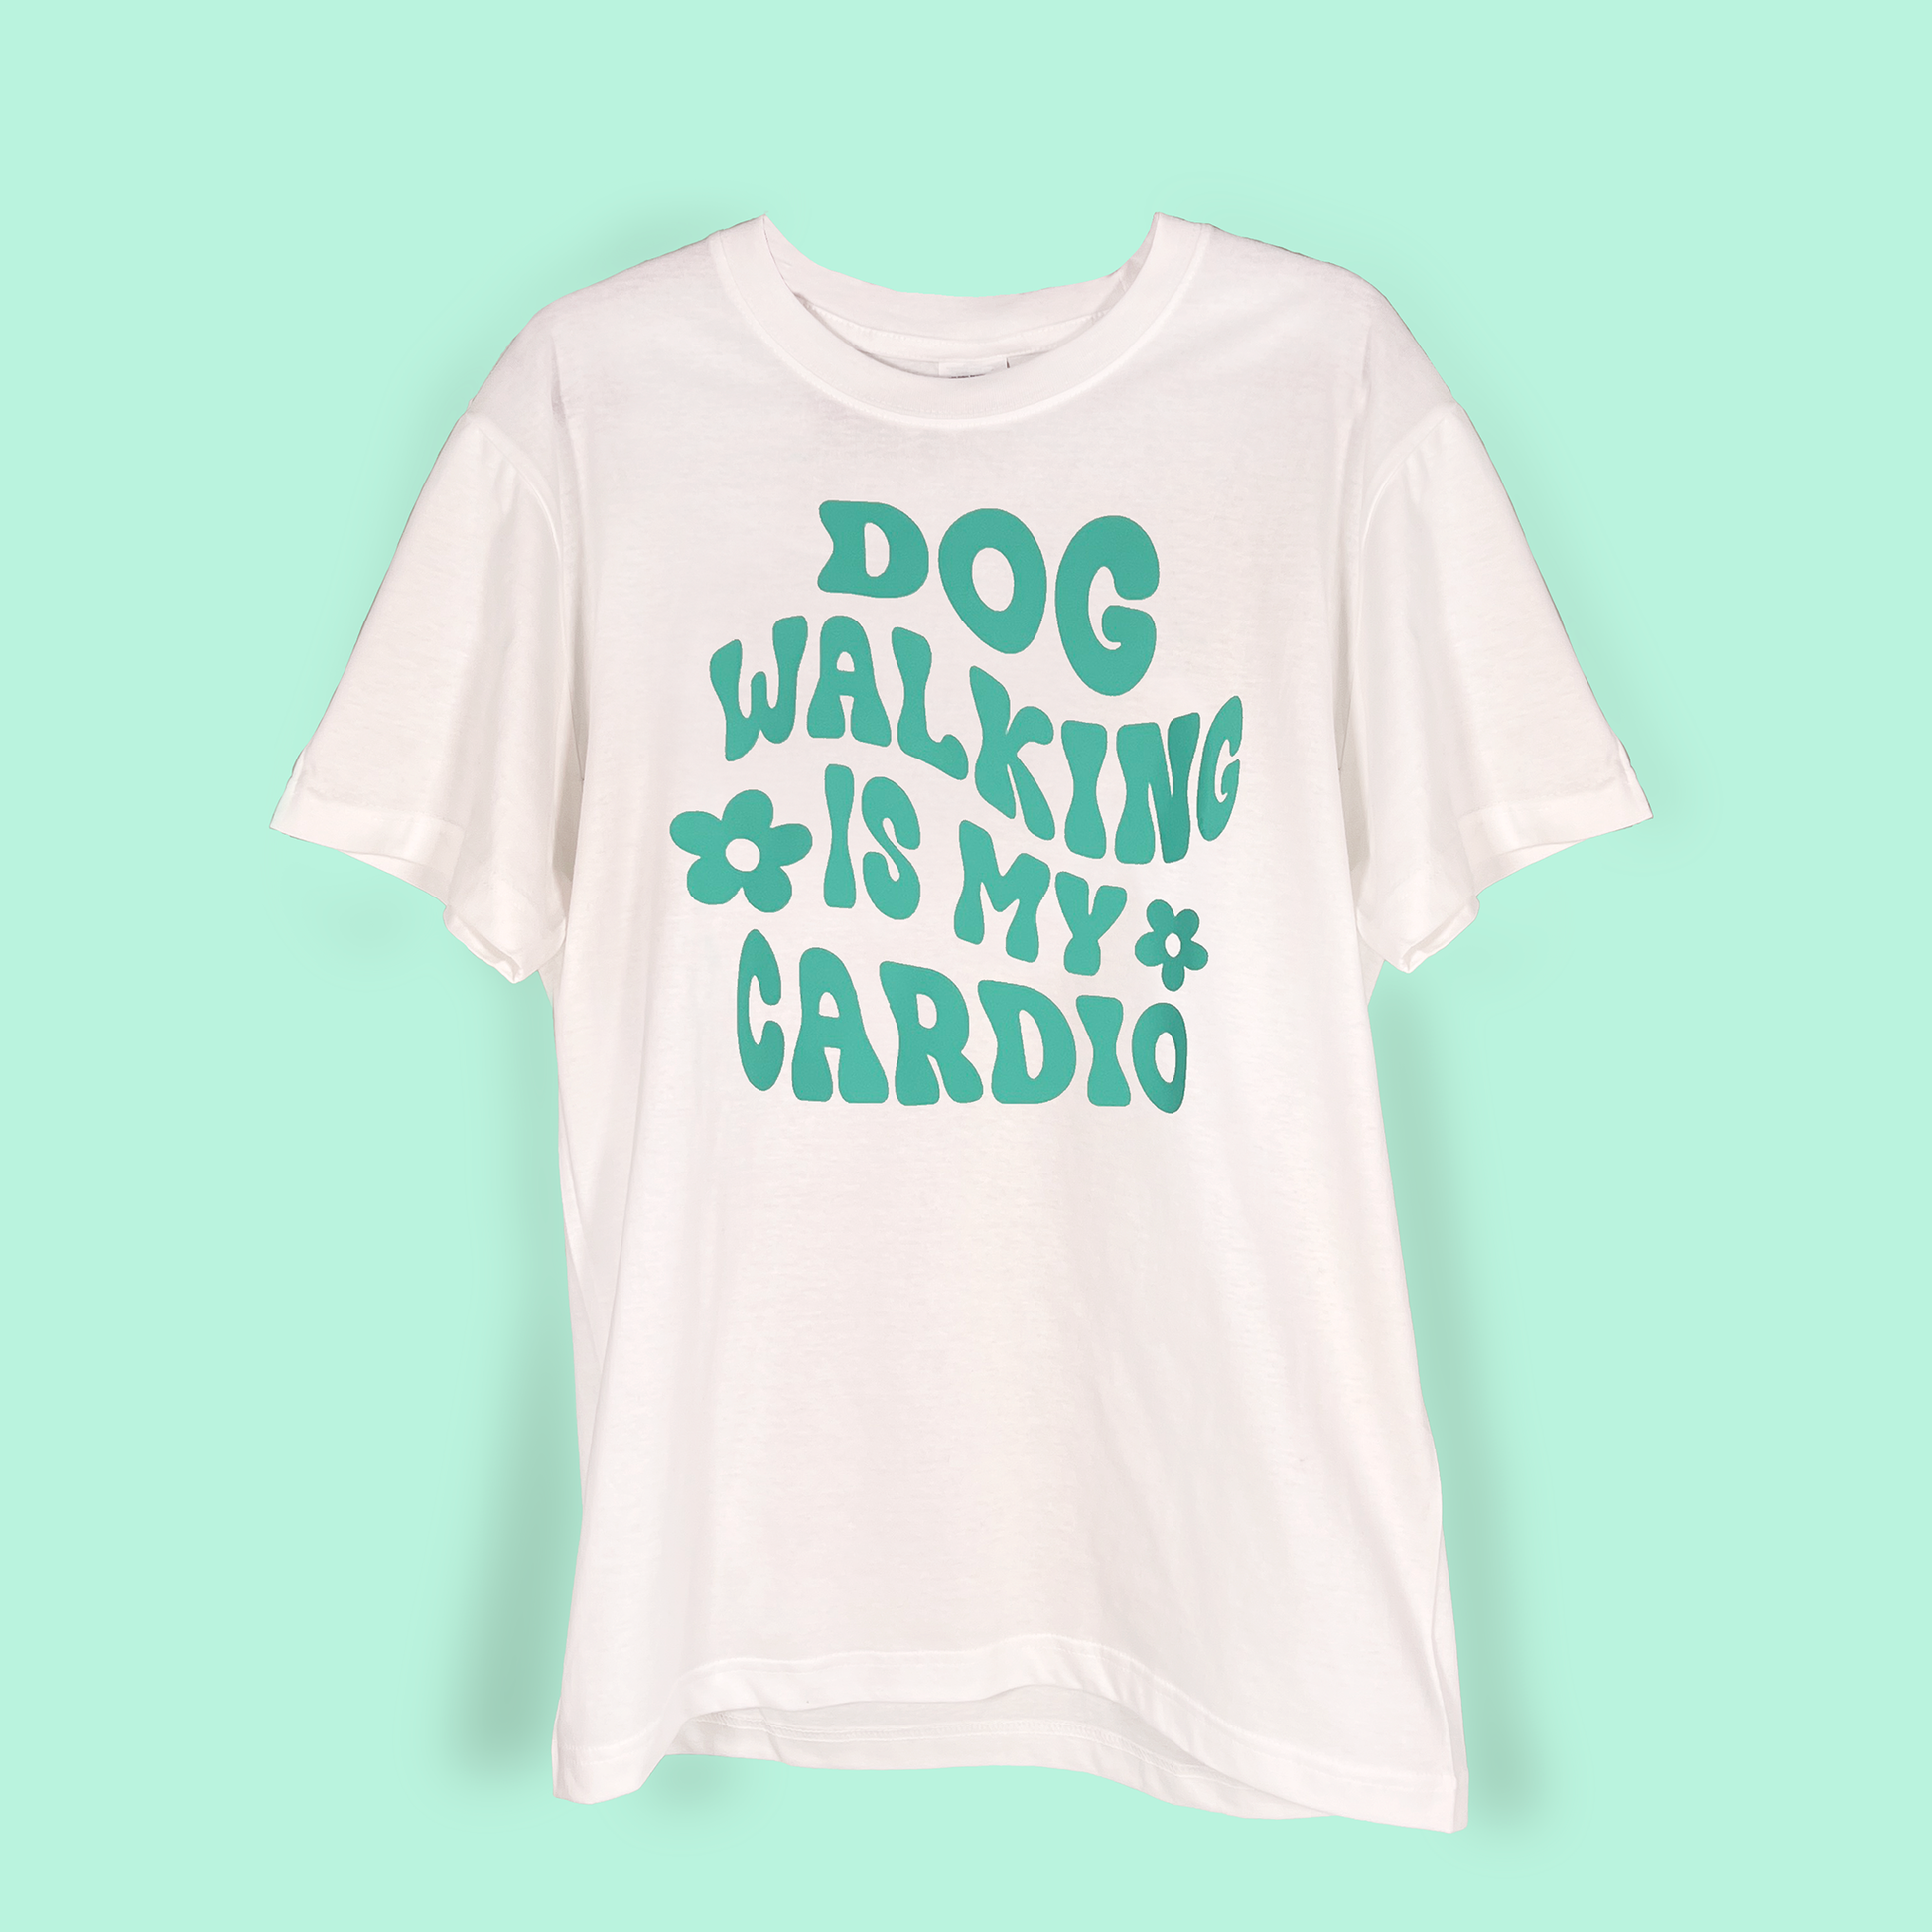 t-shirt_dog_walking_os_my_cardio_pet_pwr